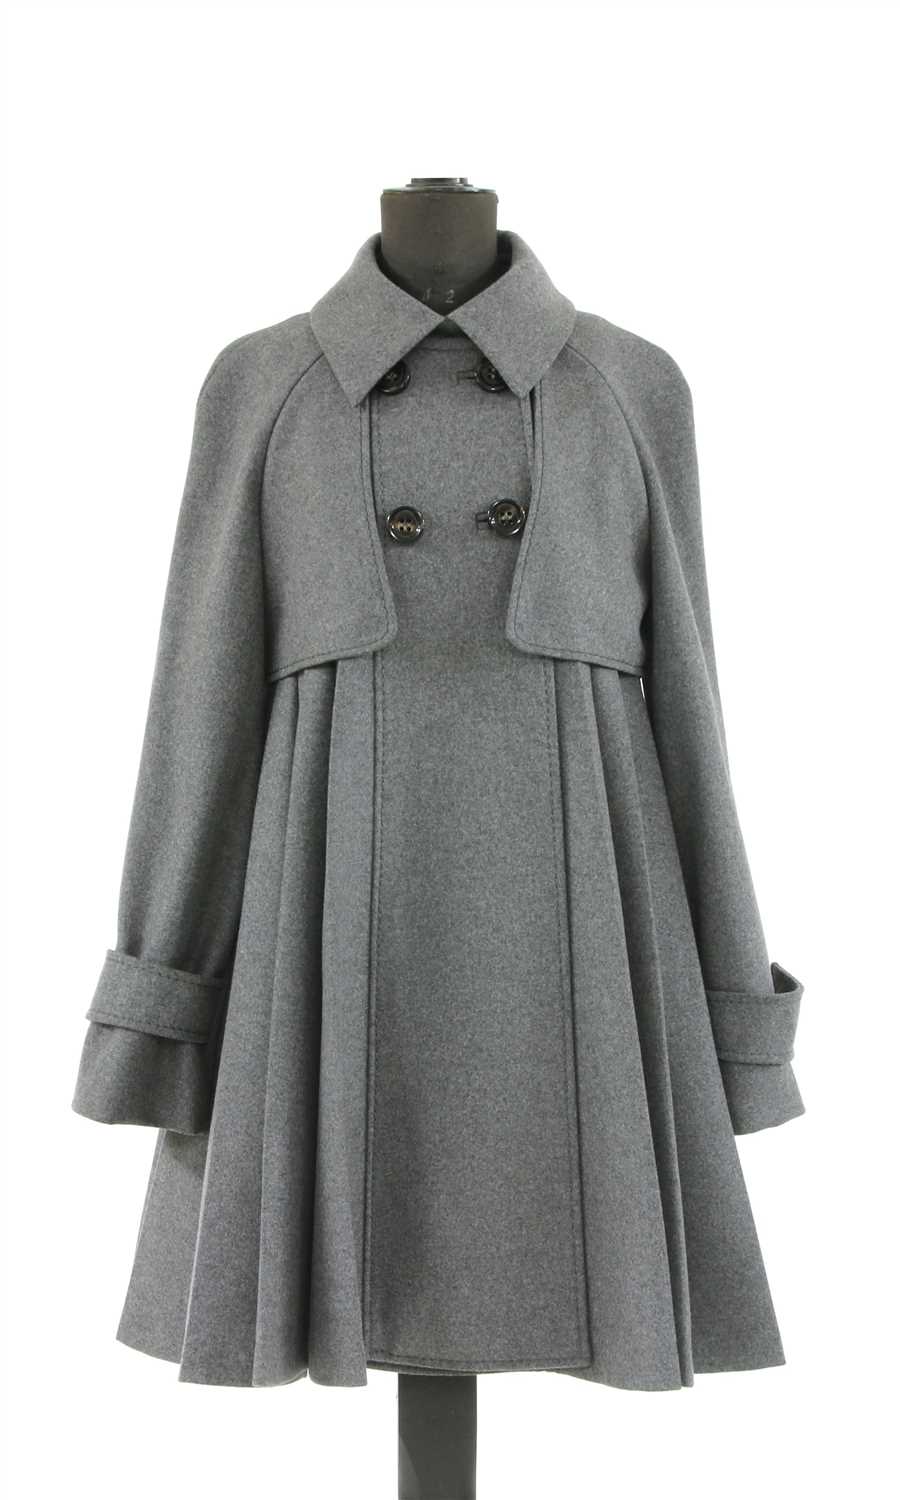 Lot 454 - A Sportsmax grey ladies 3/4 length coat